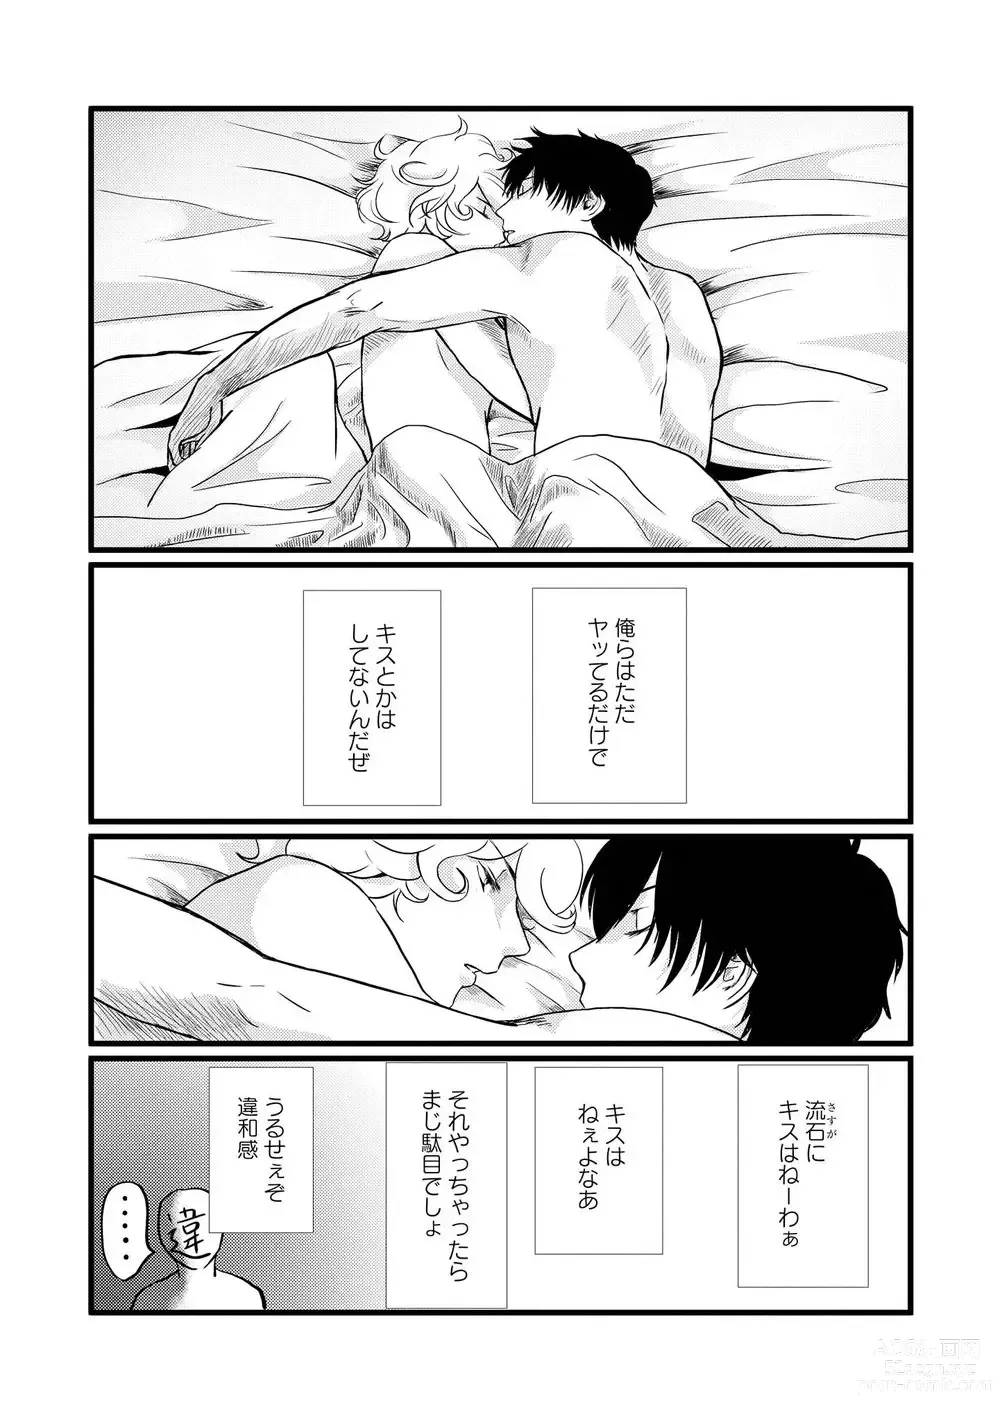 Page 24 of manga AHOERO